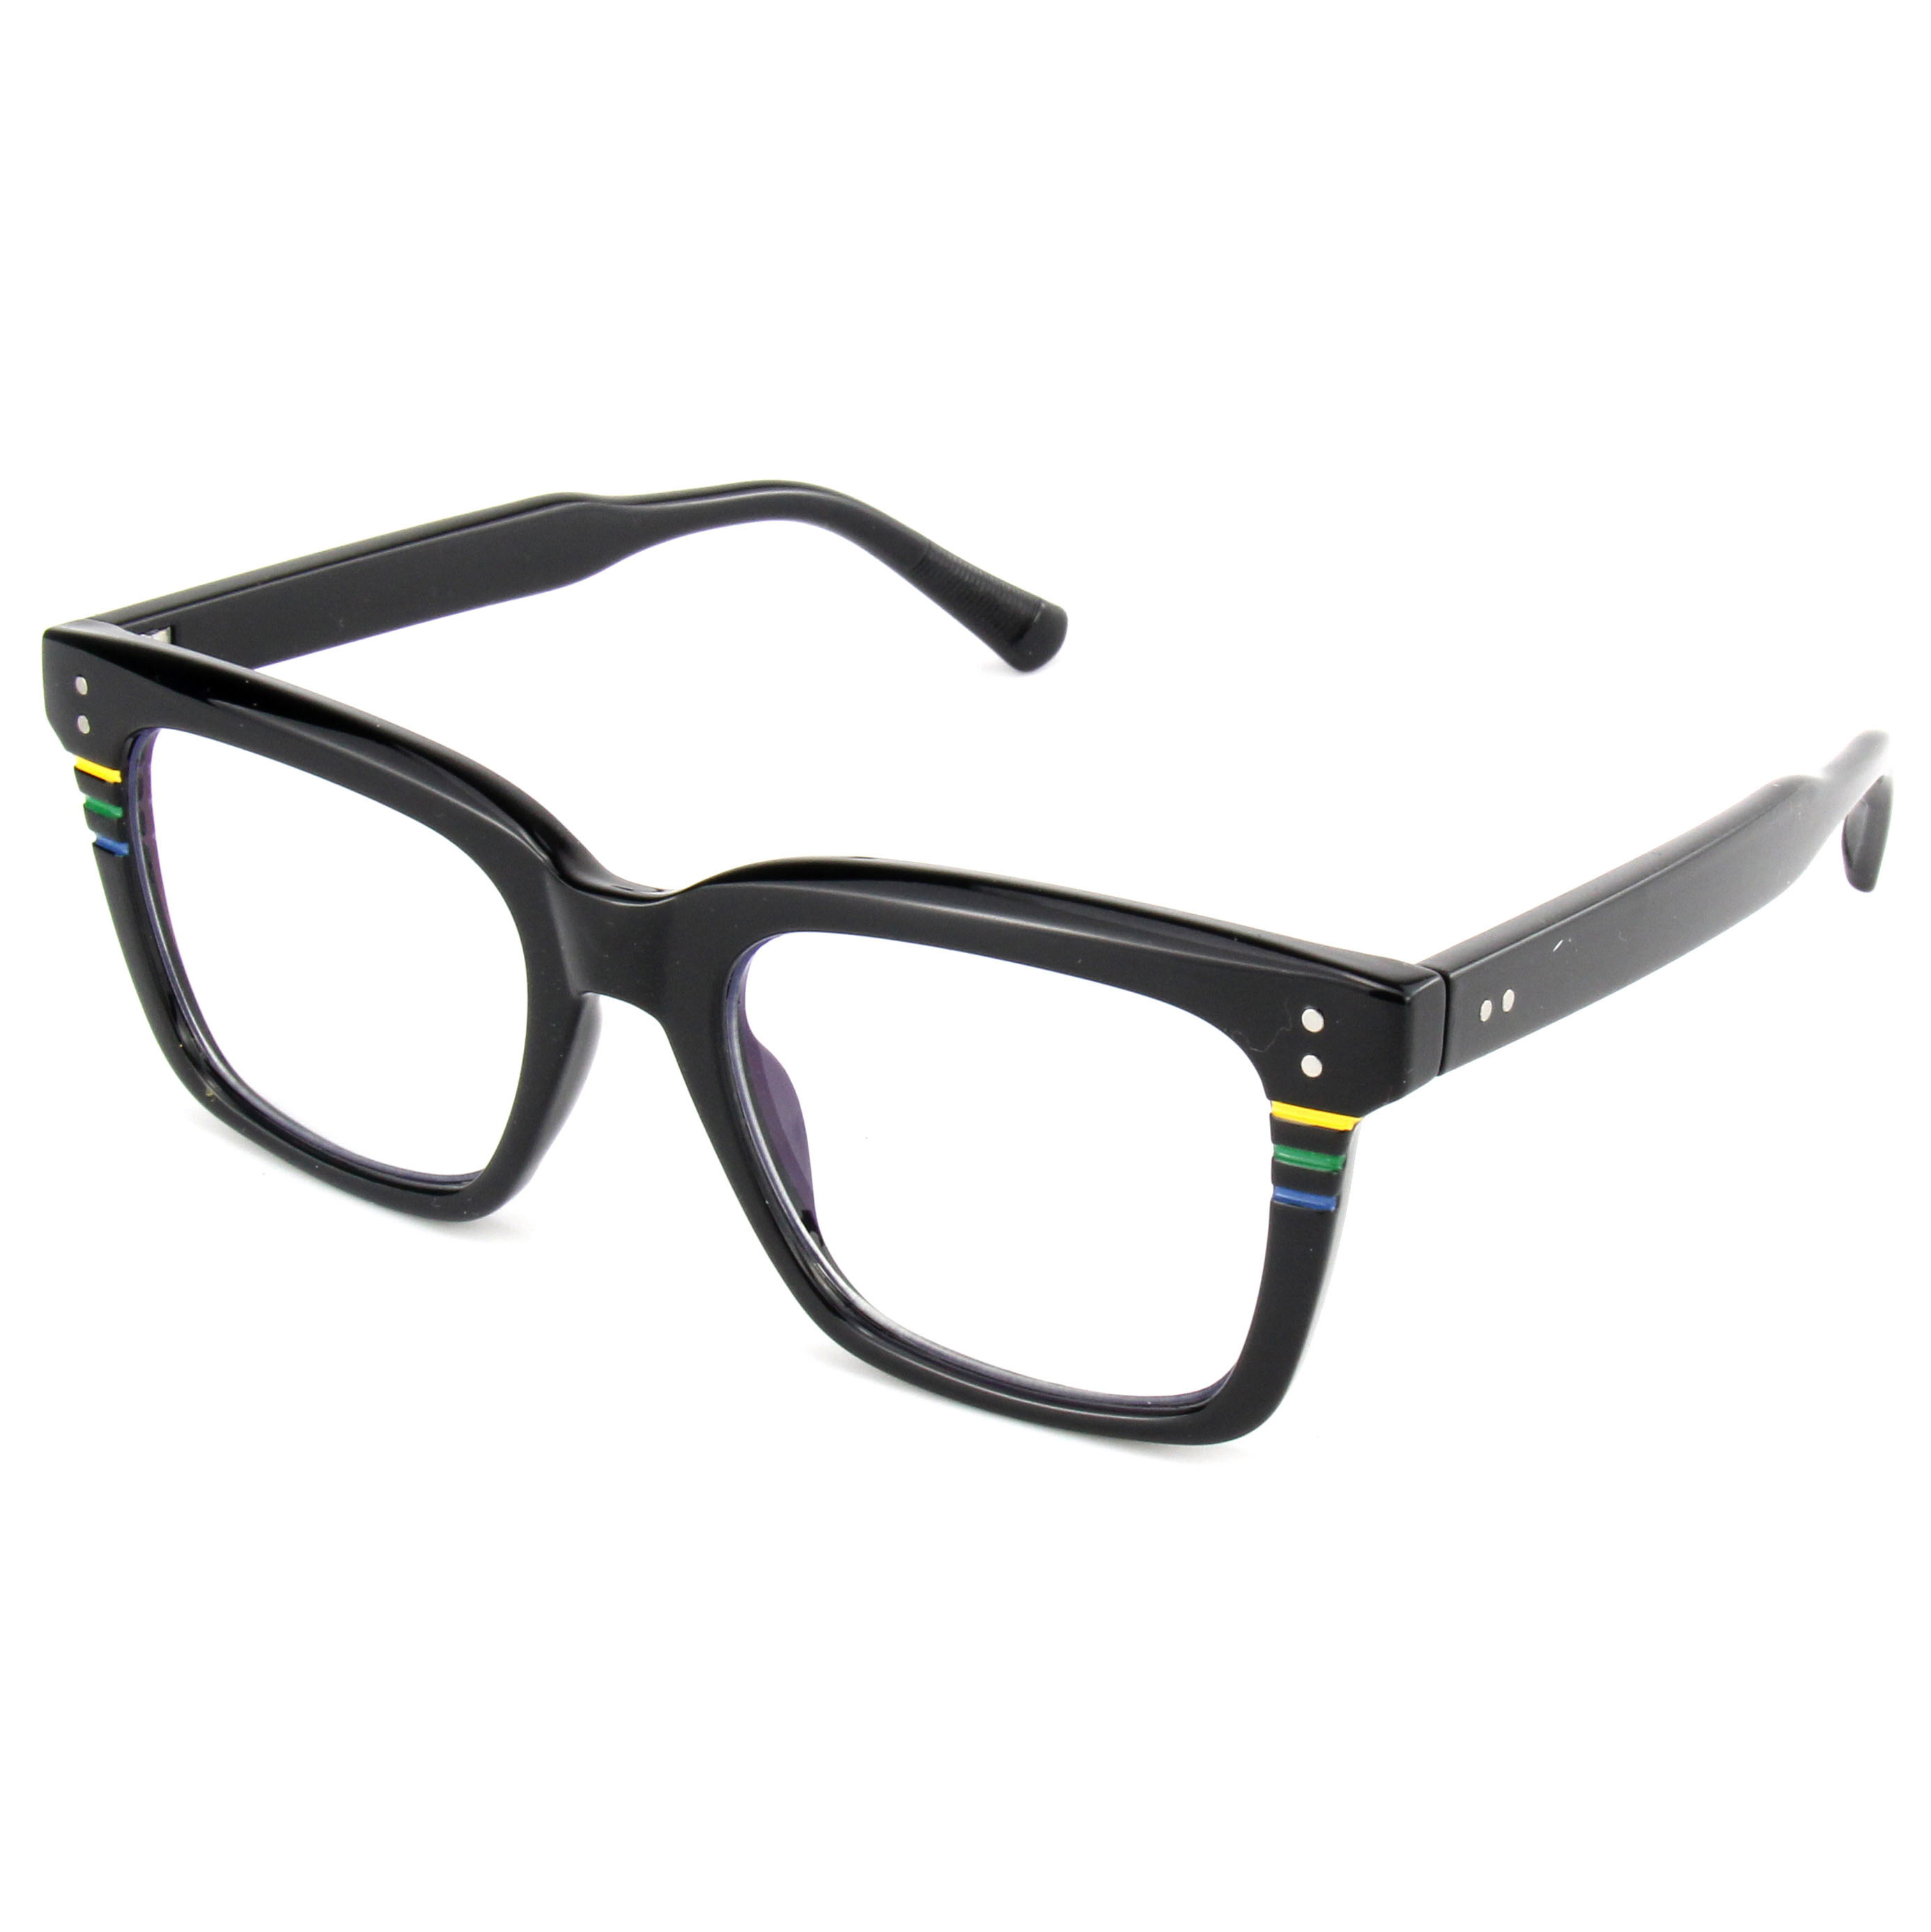 Eugenia optical glasses wholesale modern design  For optical frame glasses-1